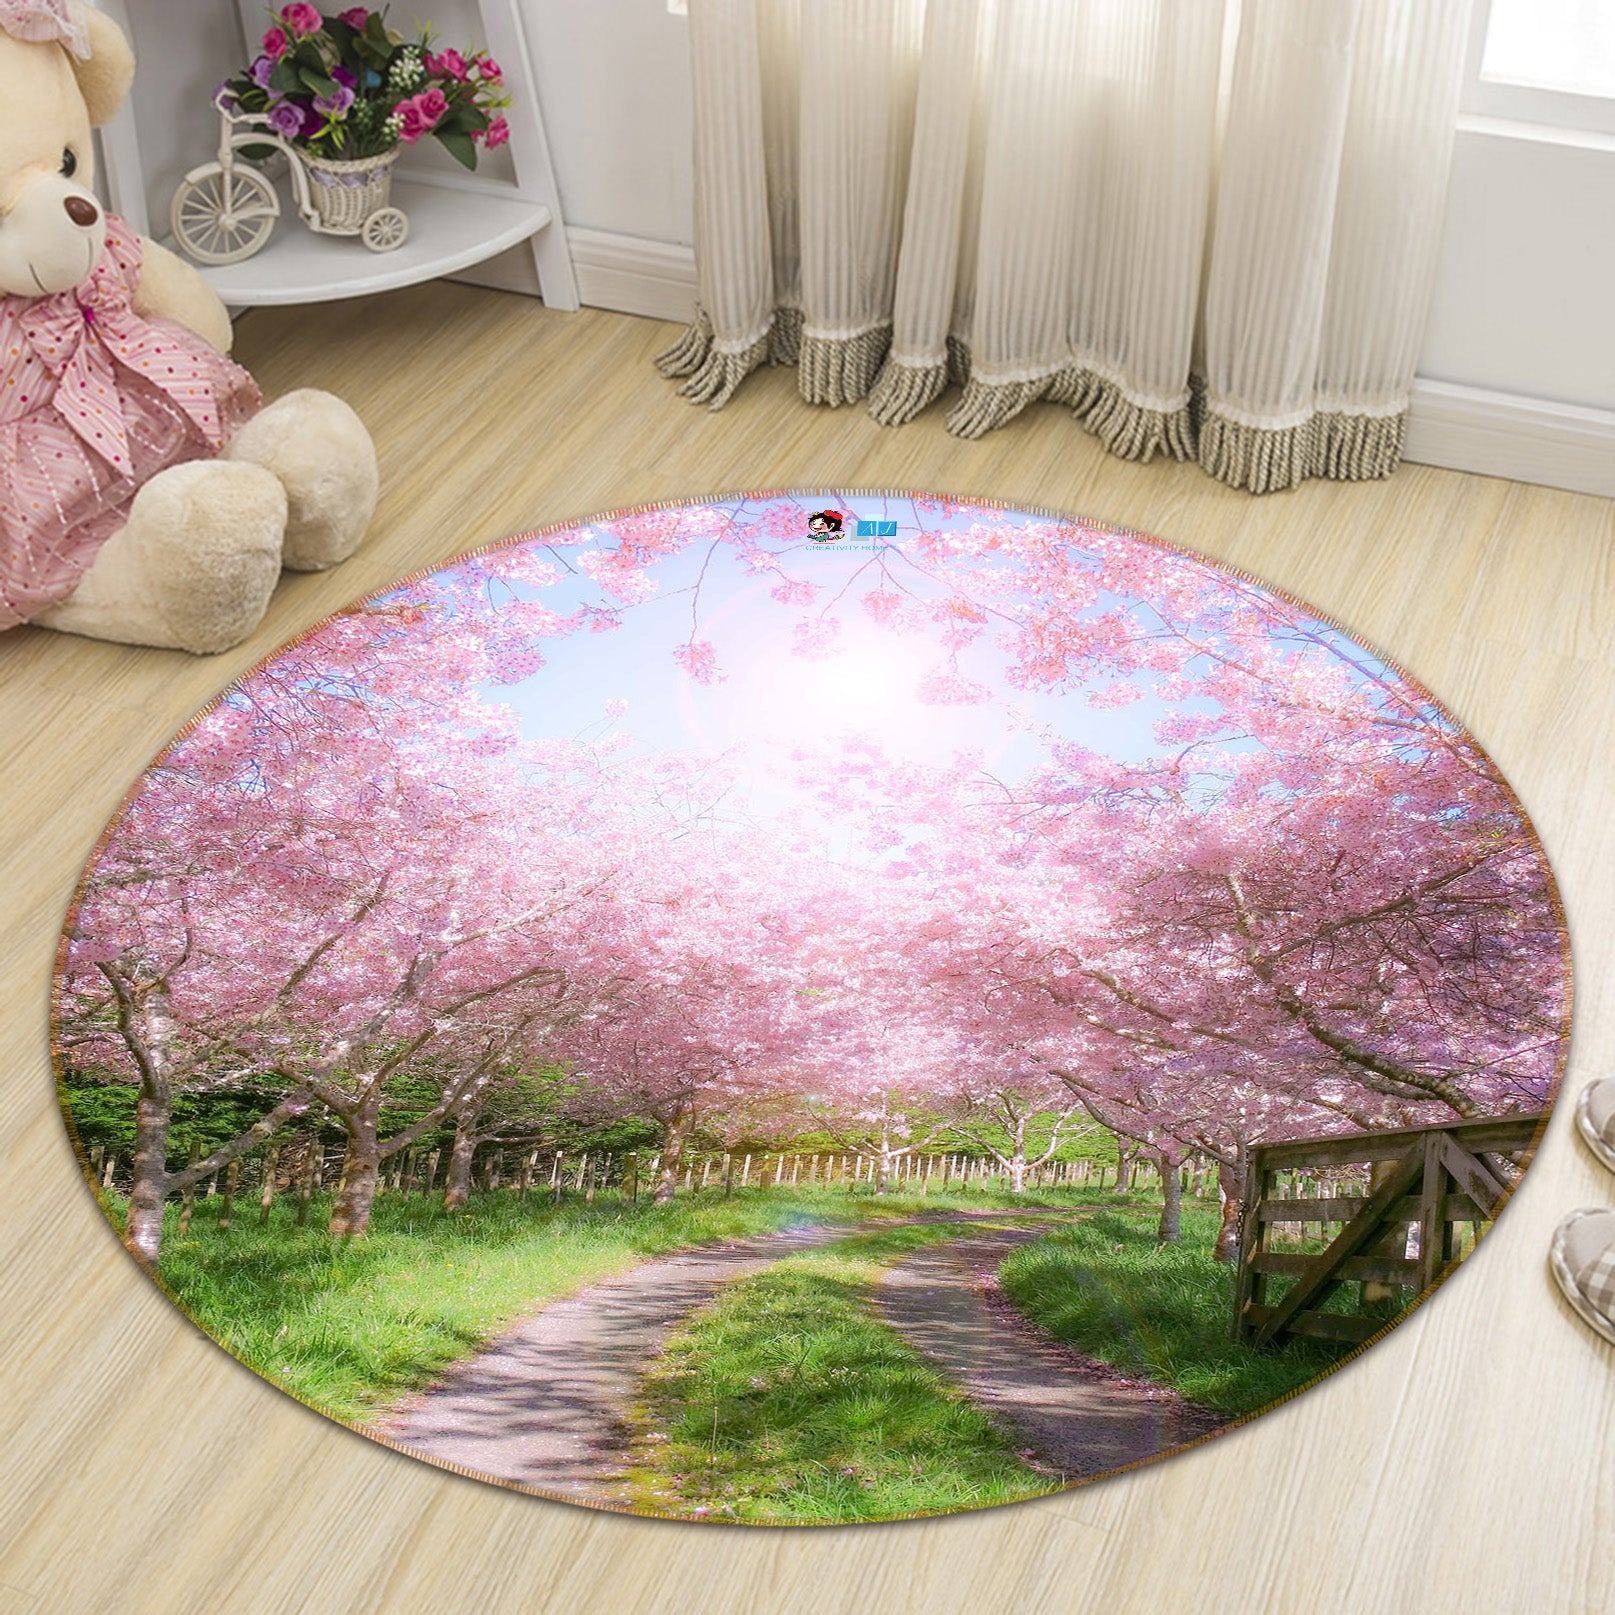 3D Cherry Blossom Forest 66193 Round Non Slip Rug Mat